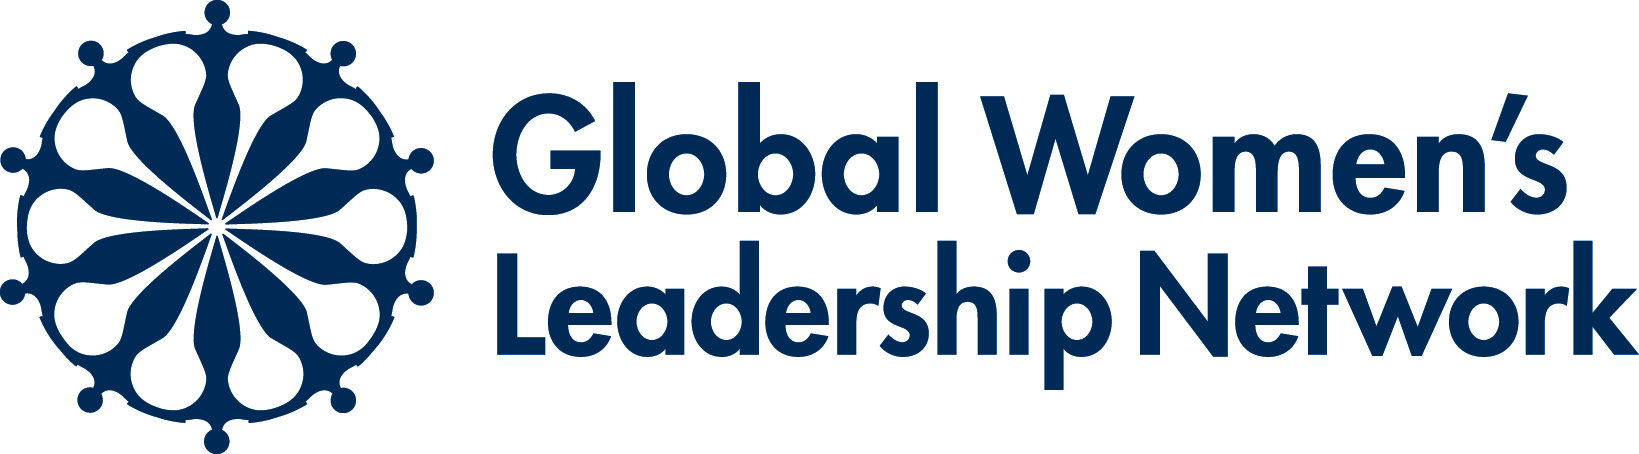 Global Women's Leadership Network